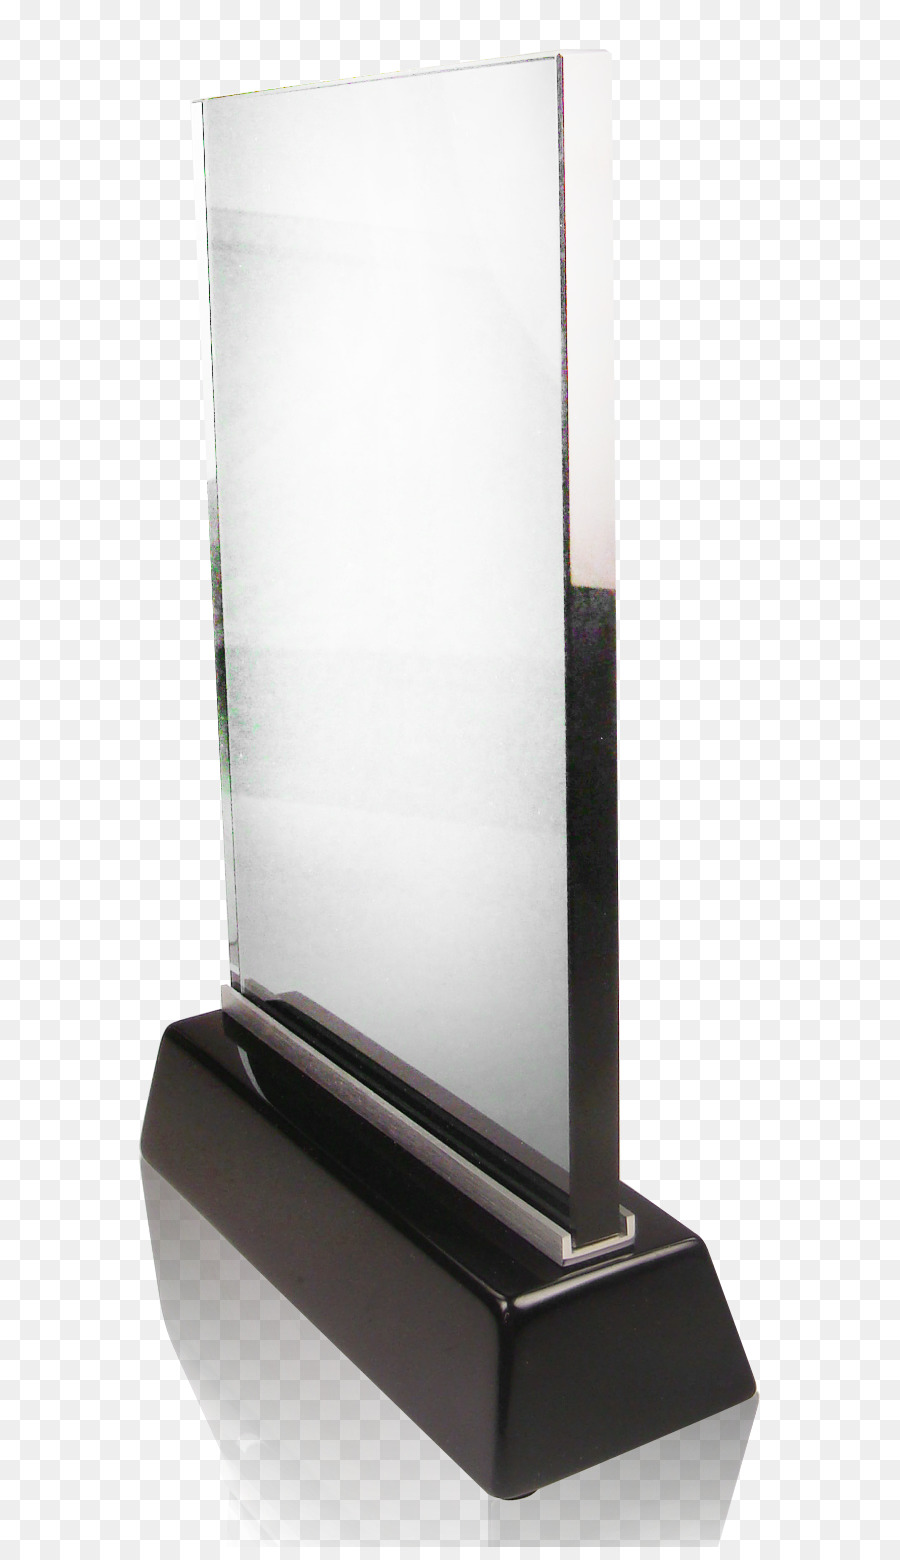 Glass Skin - Glass Panel PNG Transparent Image png download - 676*1547 - Free Transparent Glass png Download.